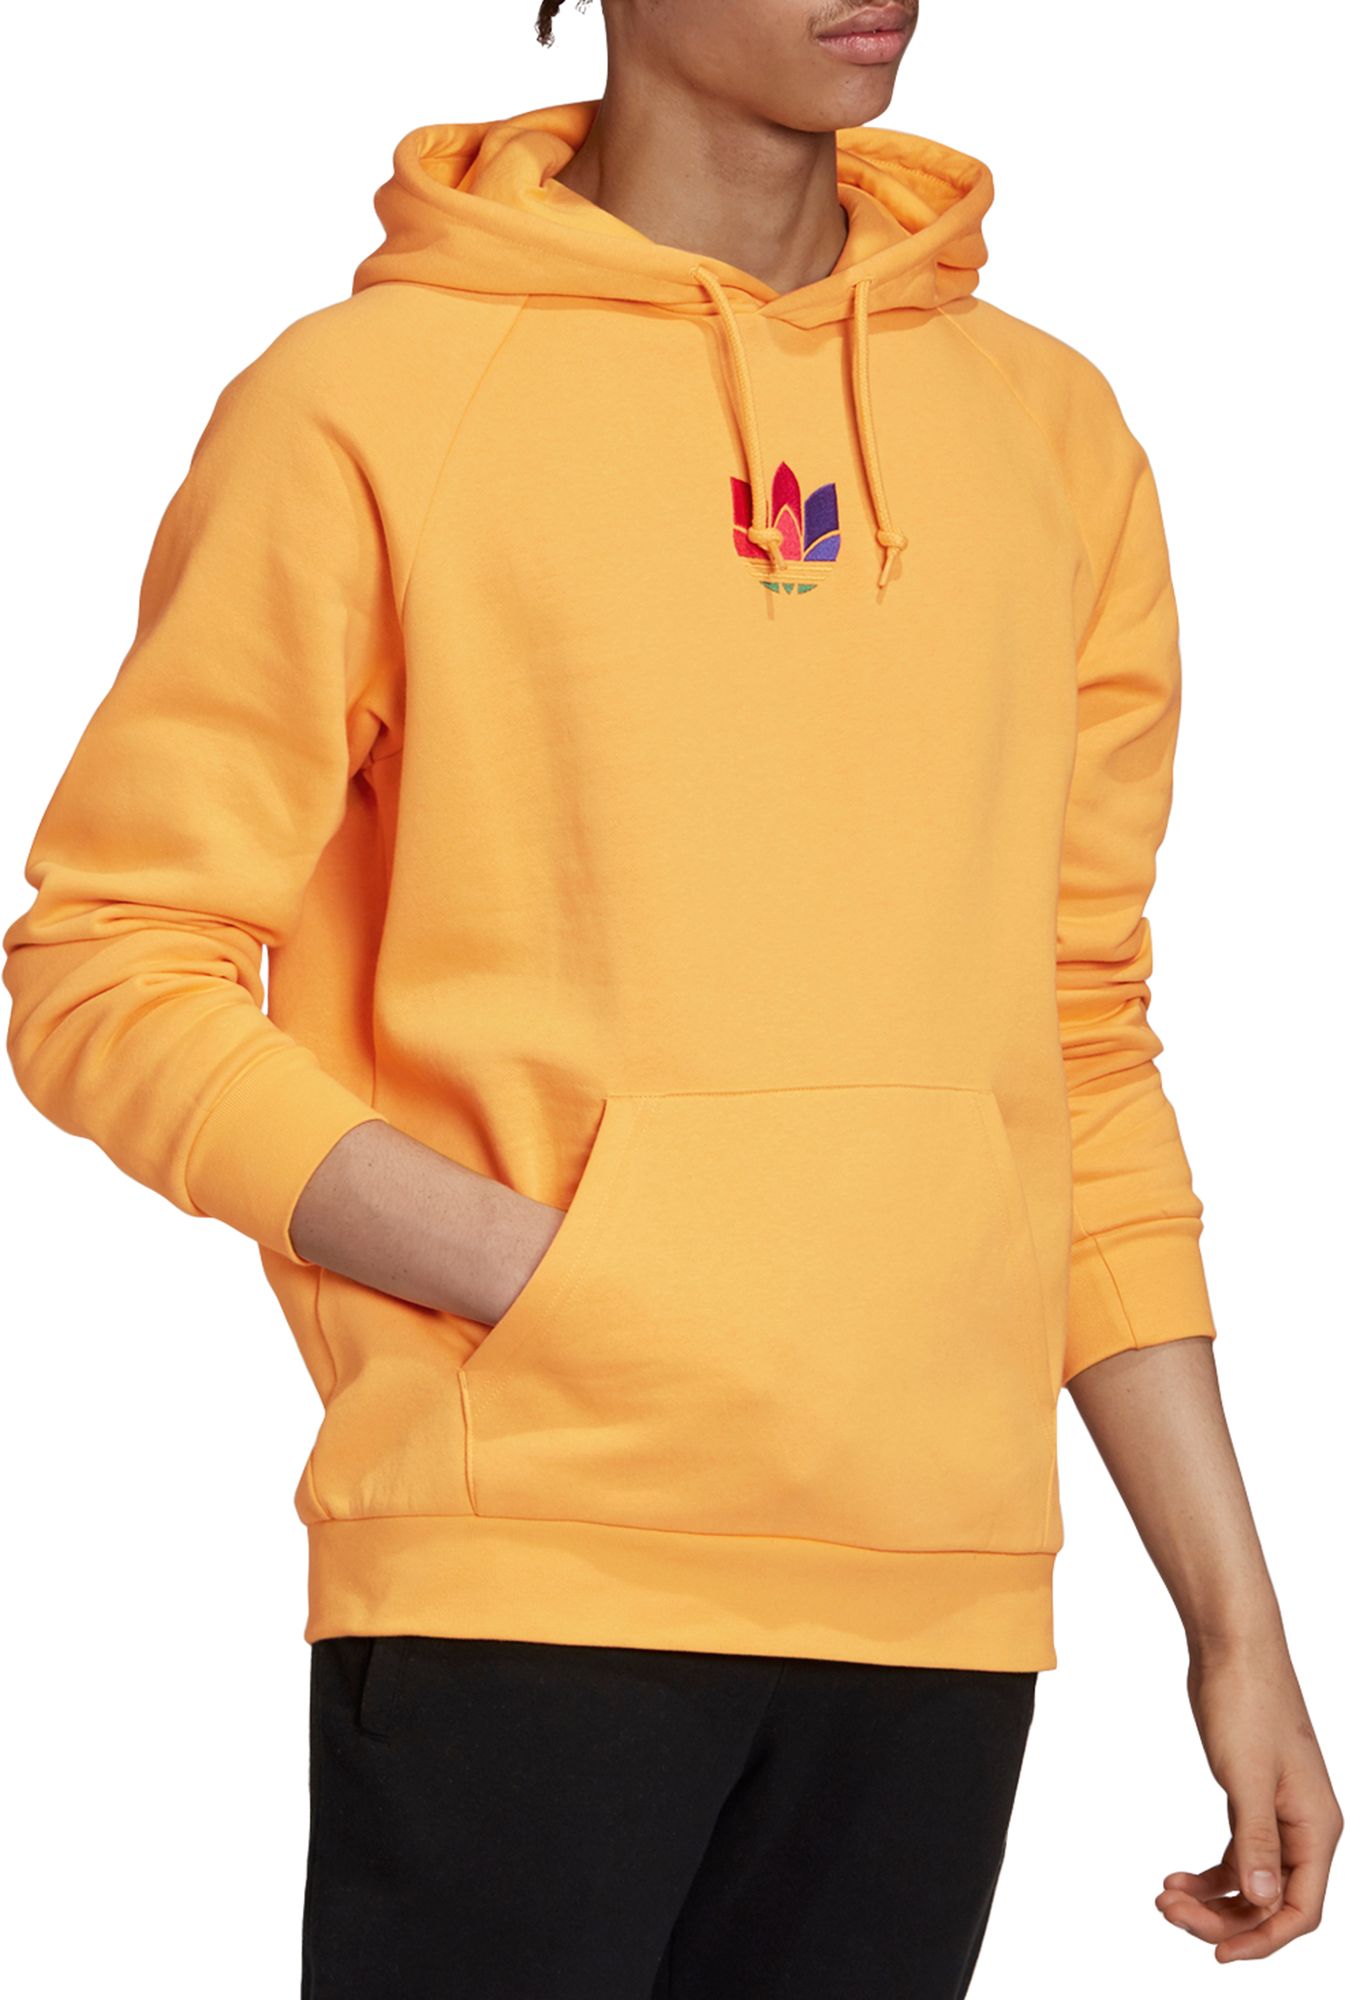 adidas trefoil sweatshirt yellow